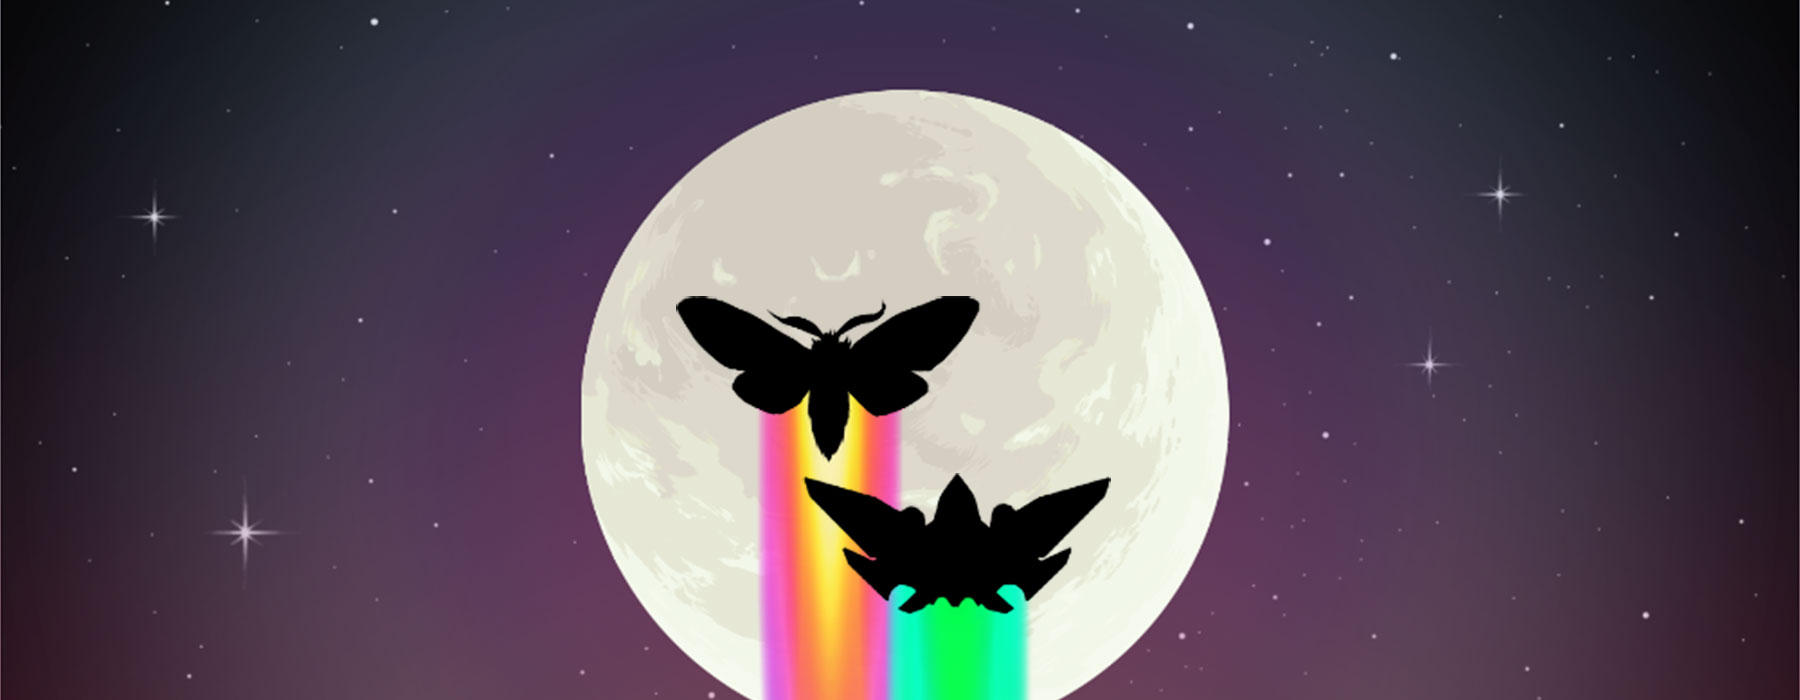 space-moth-lunar-edition